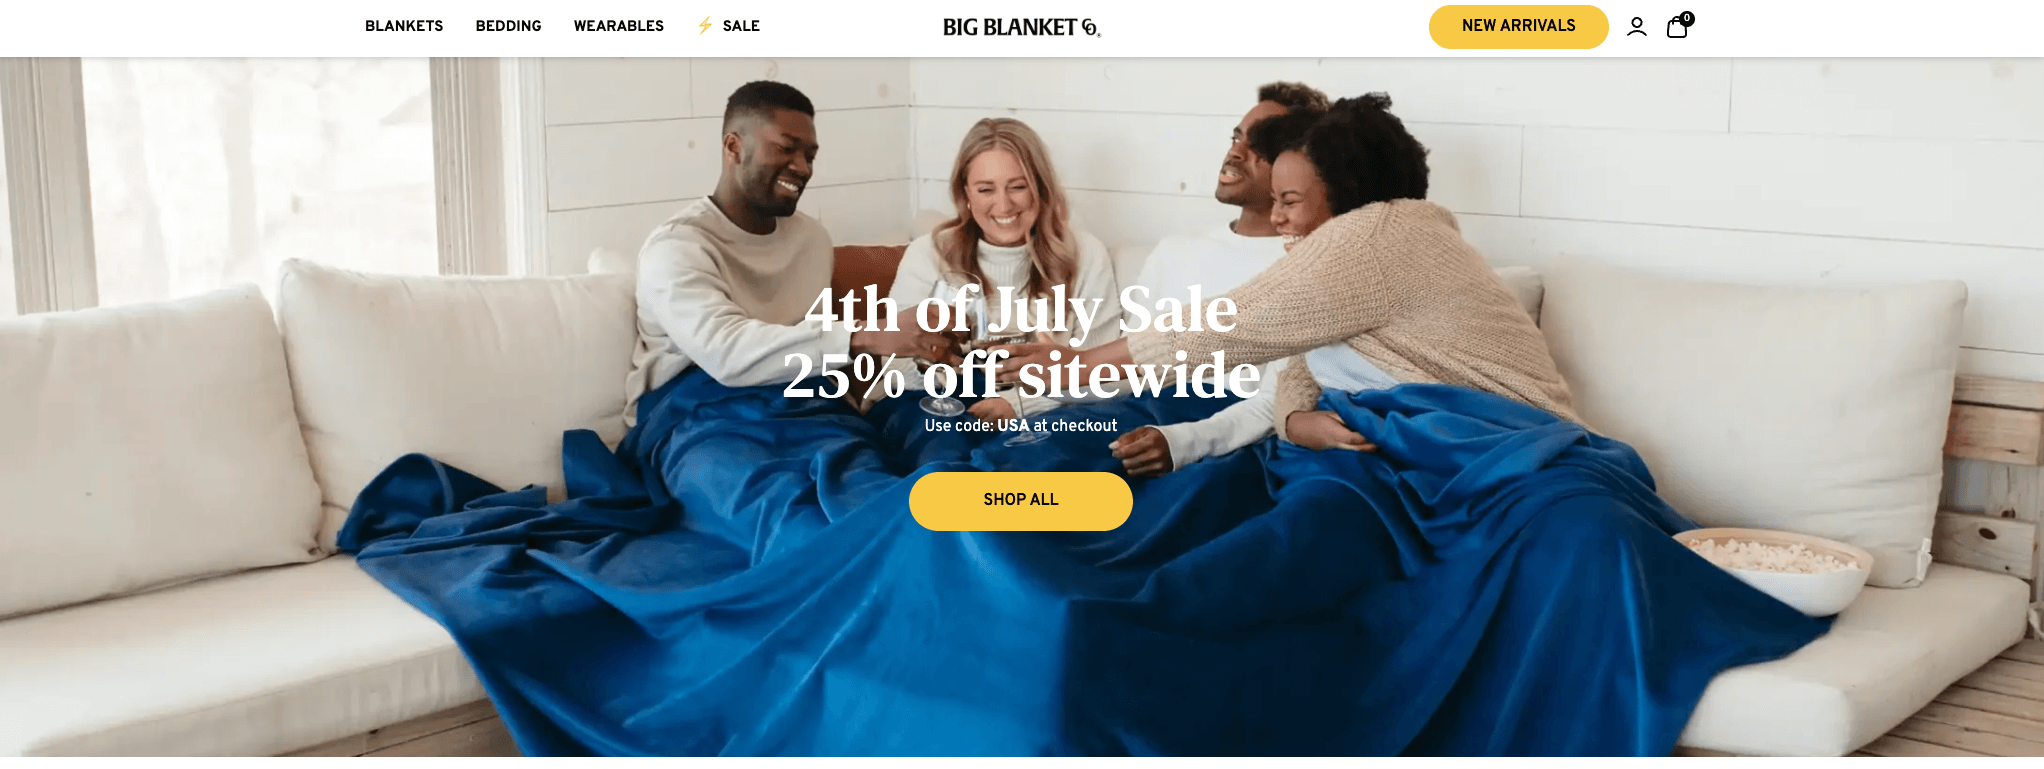 Big-Blanket-Omnichannel-marketing-Desktop-Version